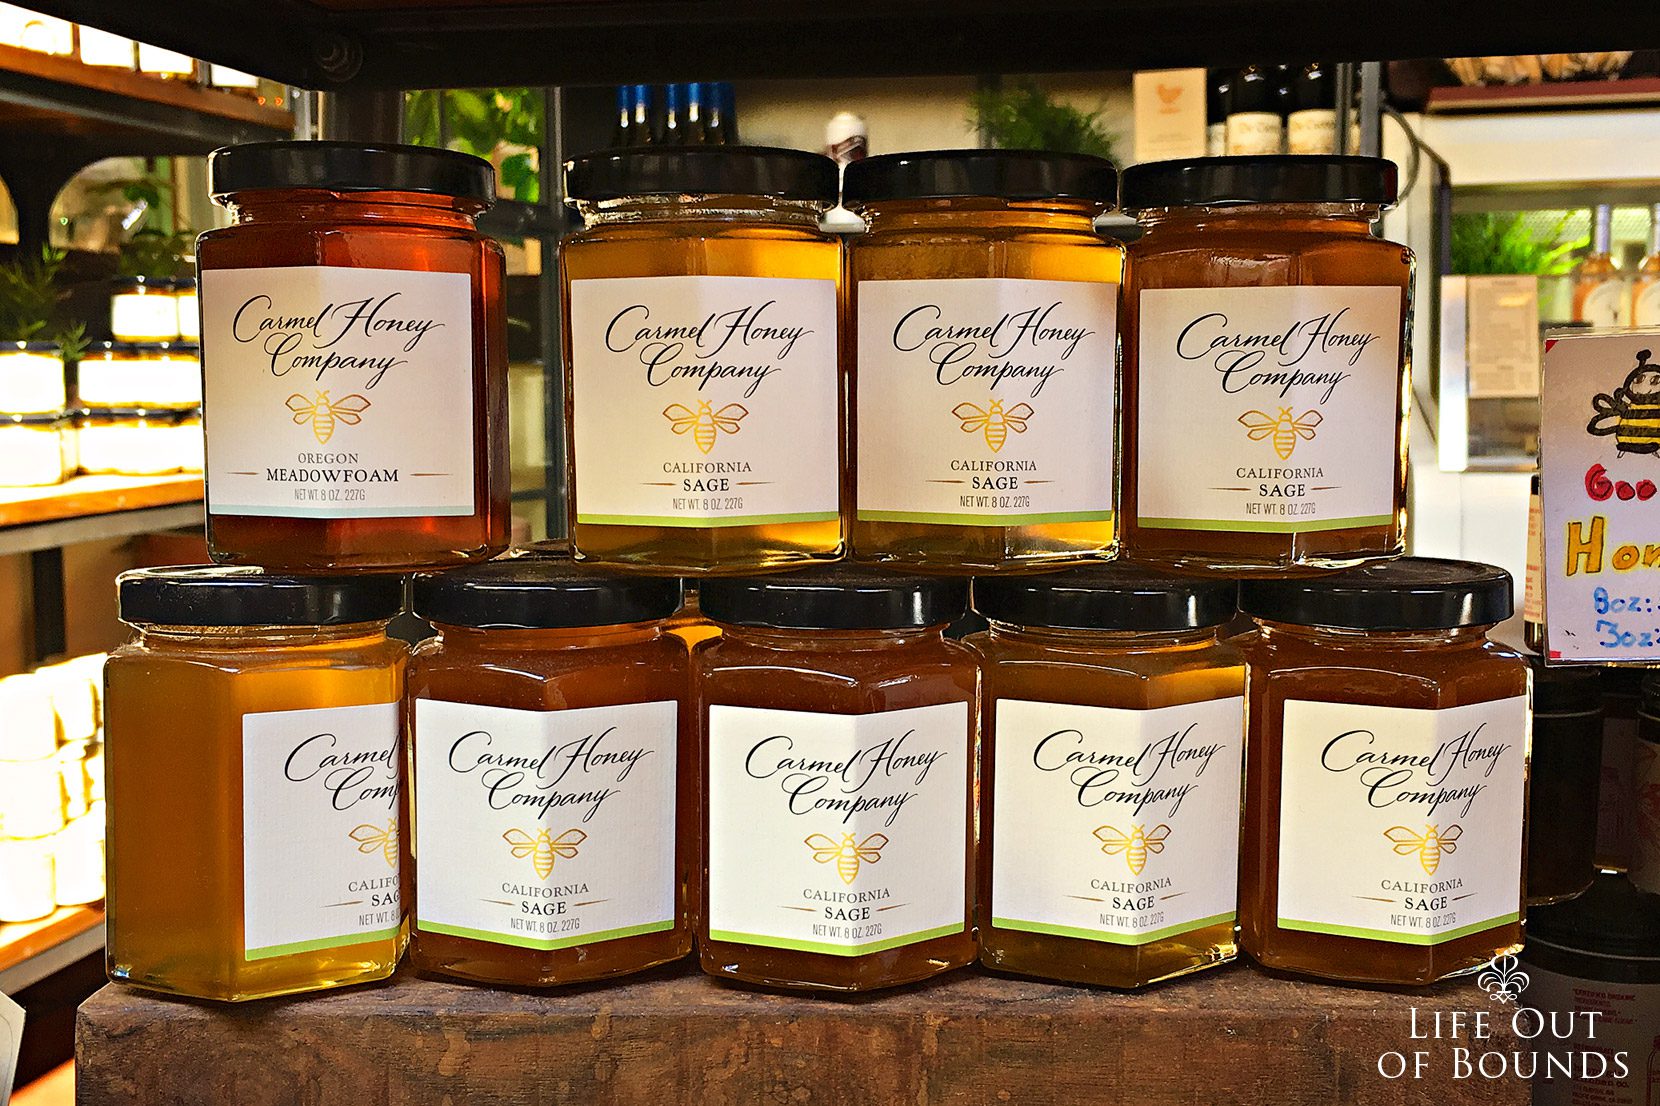 Assorted-Honey-by-Carmel-Honey-Company-at-Carmel-Belle-cafe-in-Carmel-by-the-Sea-California